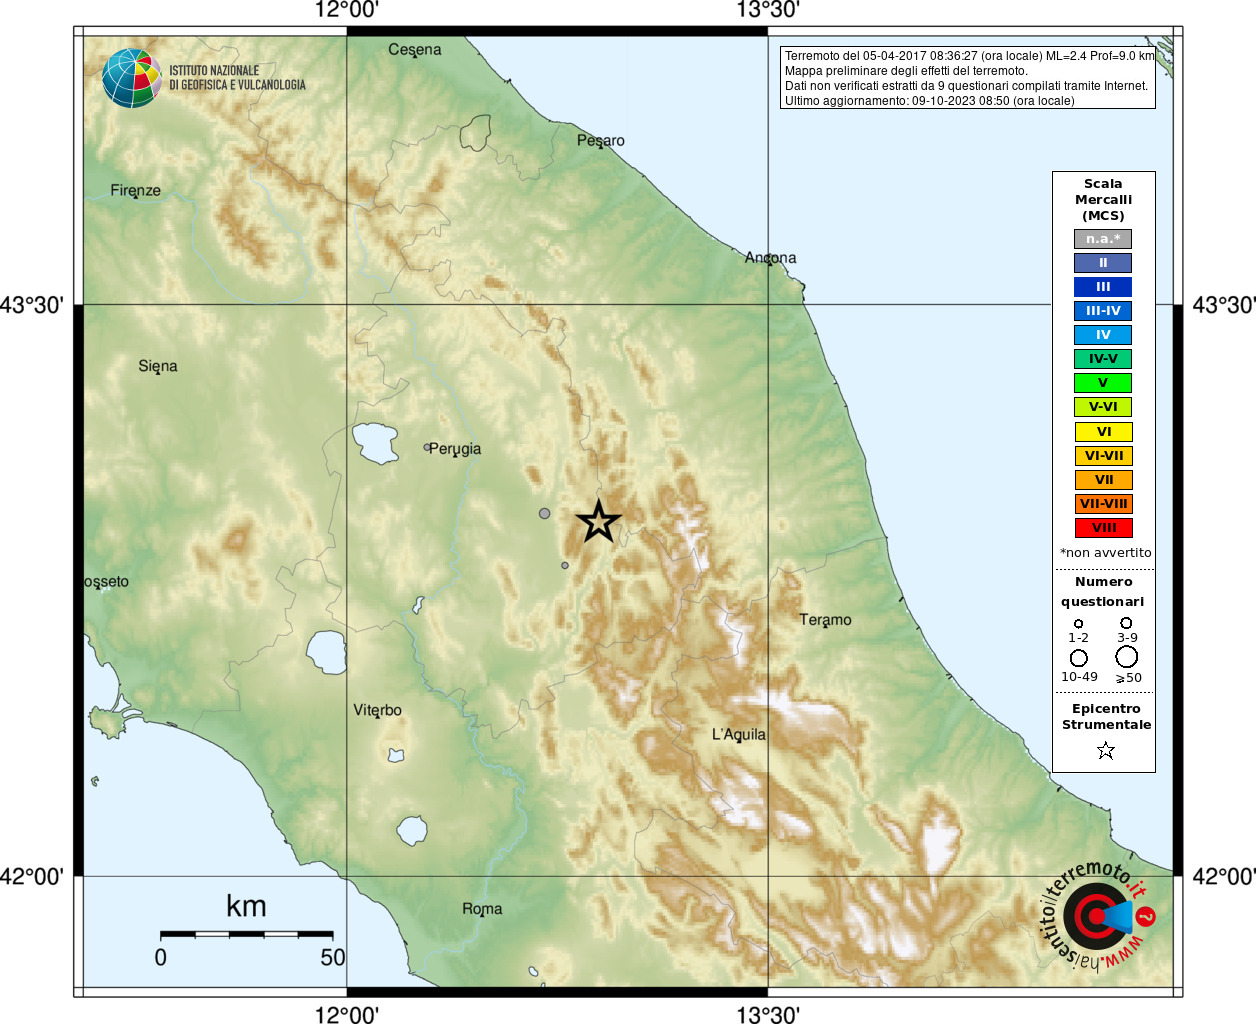 Earthquake 5 km NW Sellano (PG), Magnitude ML 2.4, 5 April 2017 time 08:36:27 ...1252 x 1024